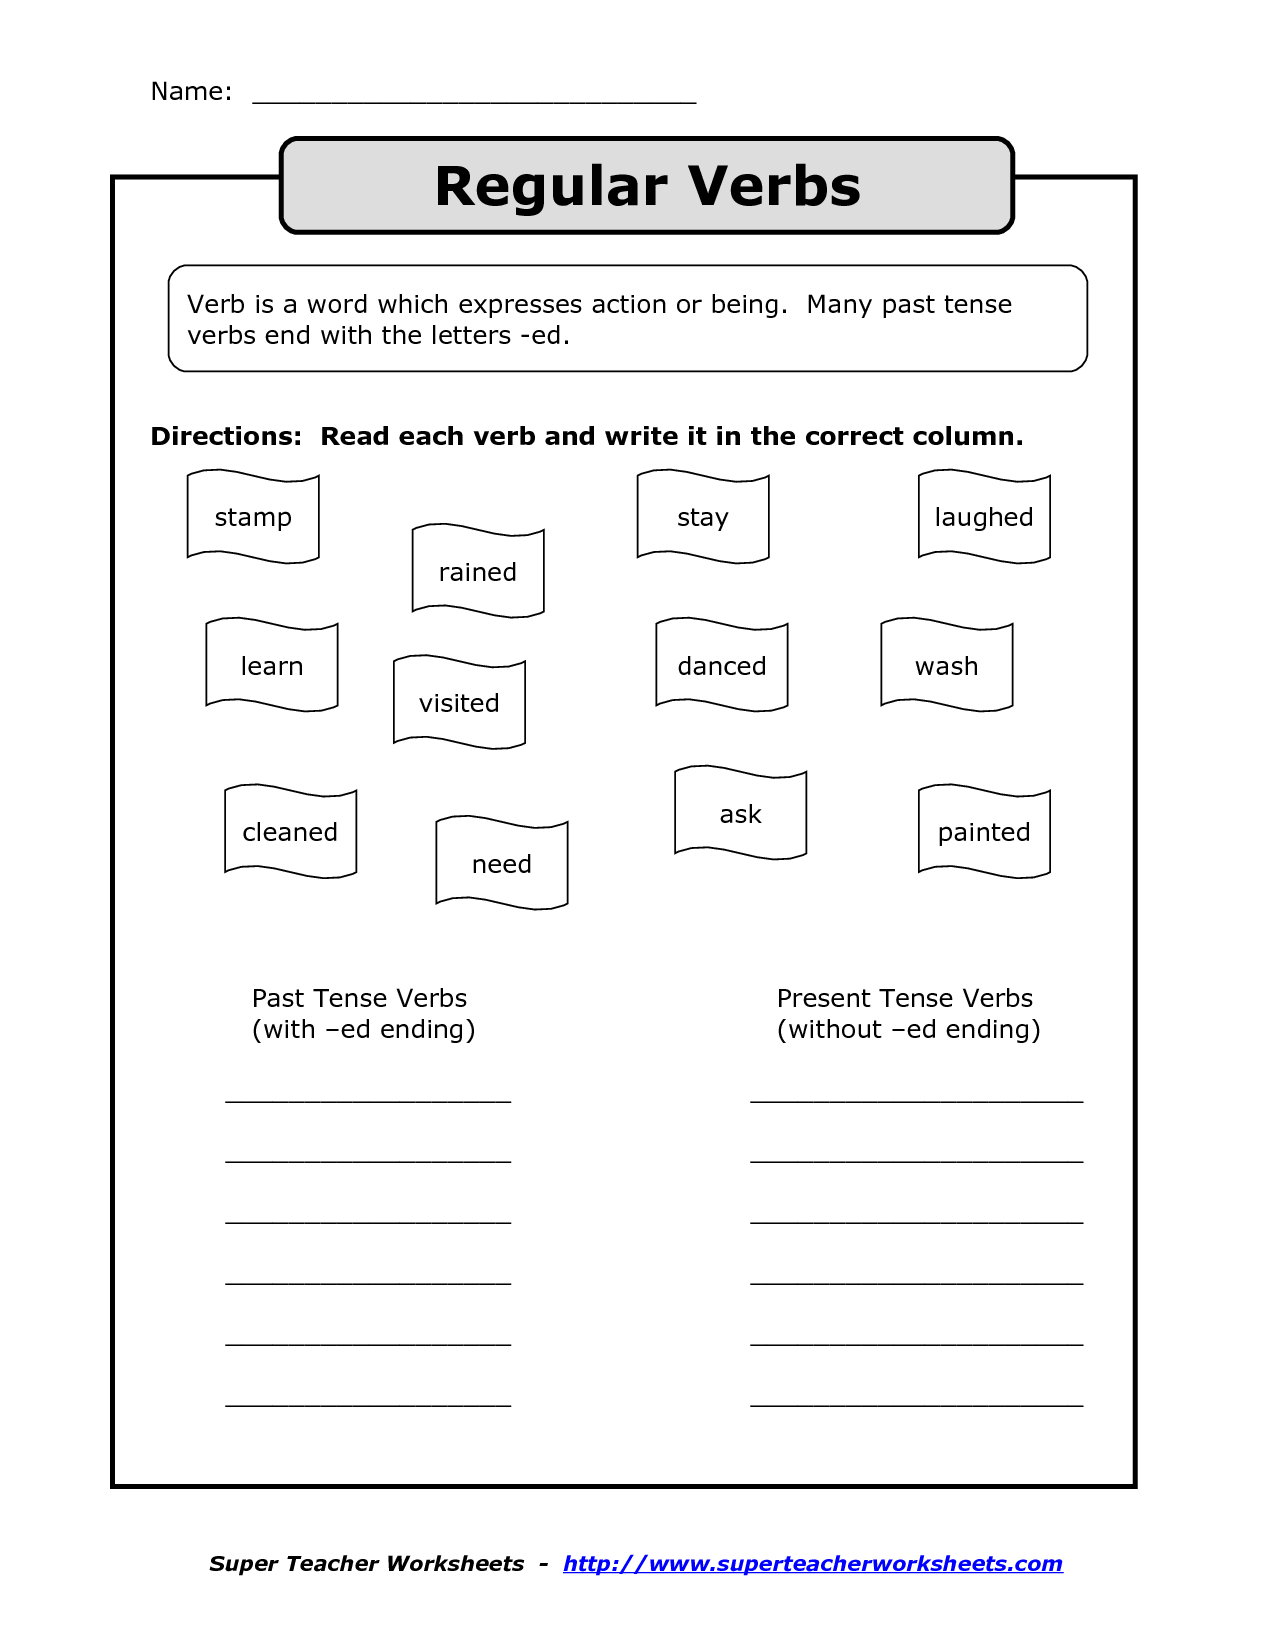 Regular Past Tense Verbs Worksheets Image